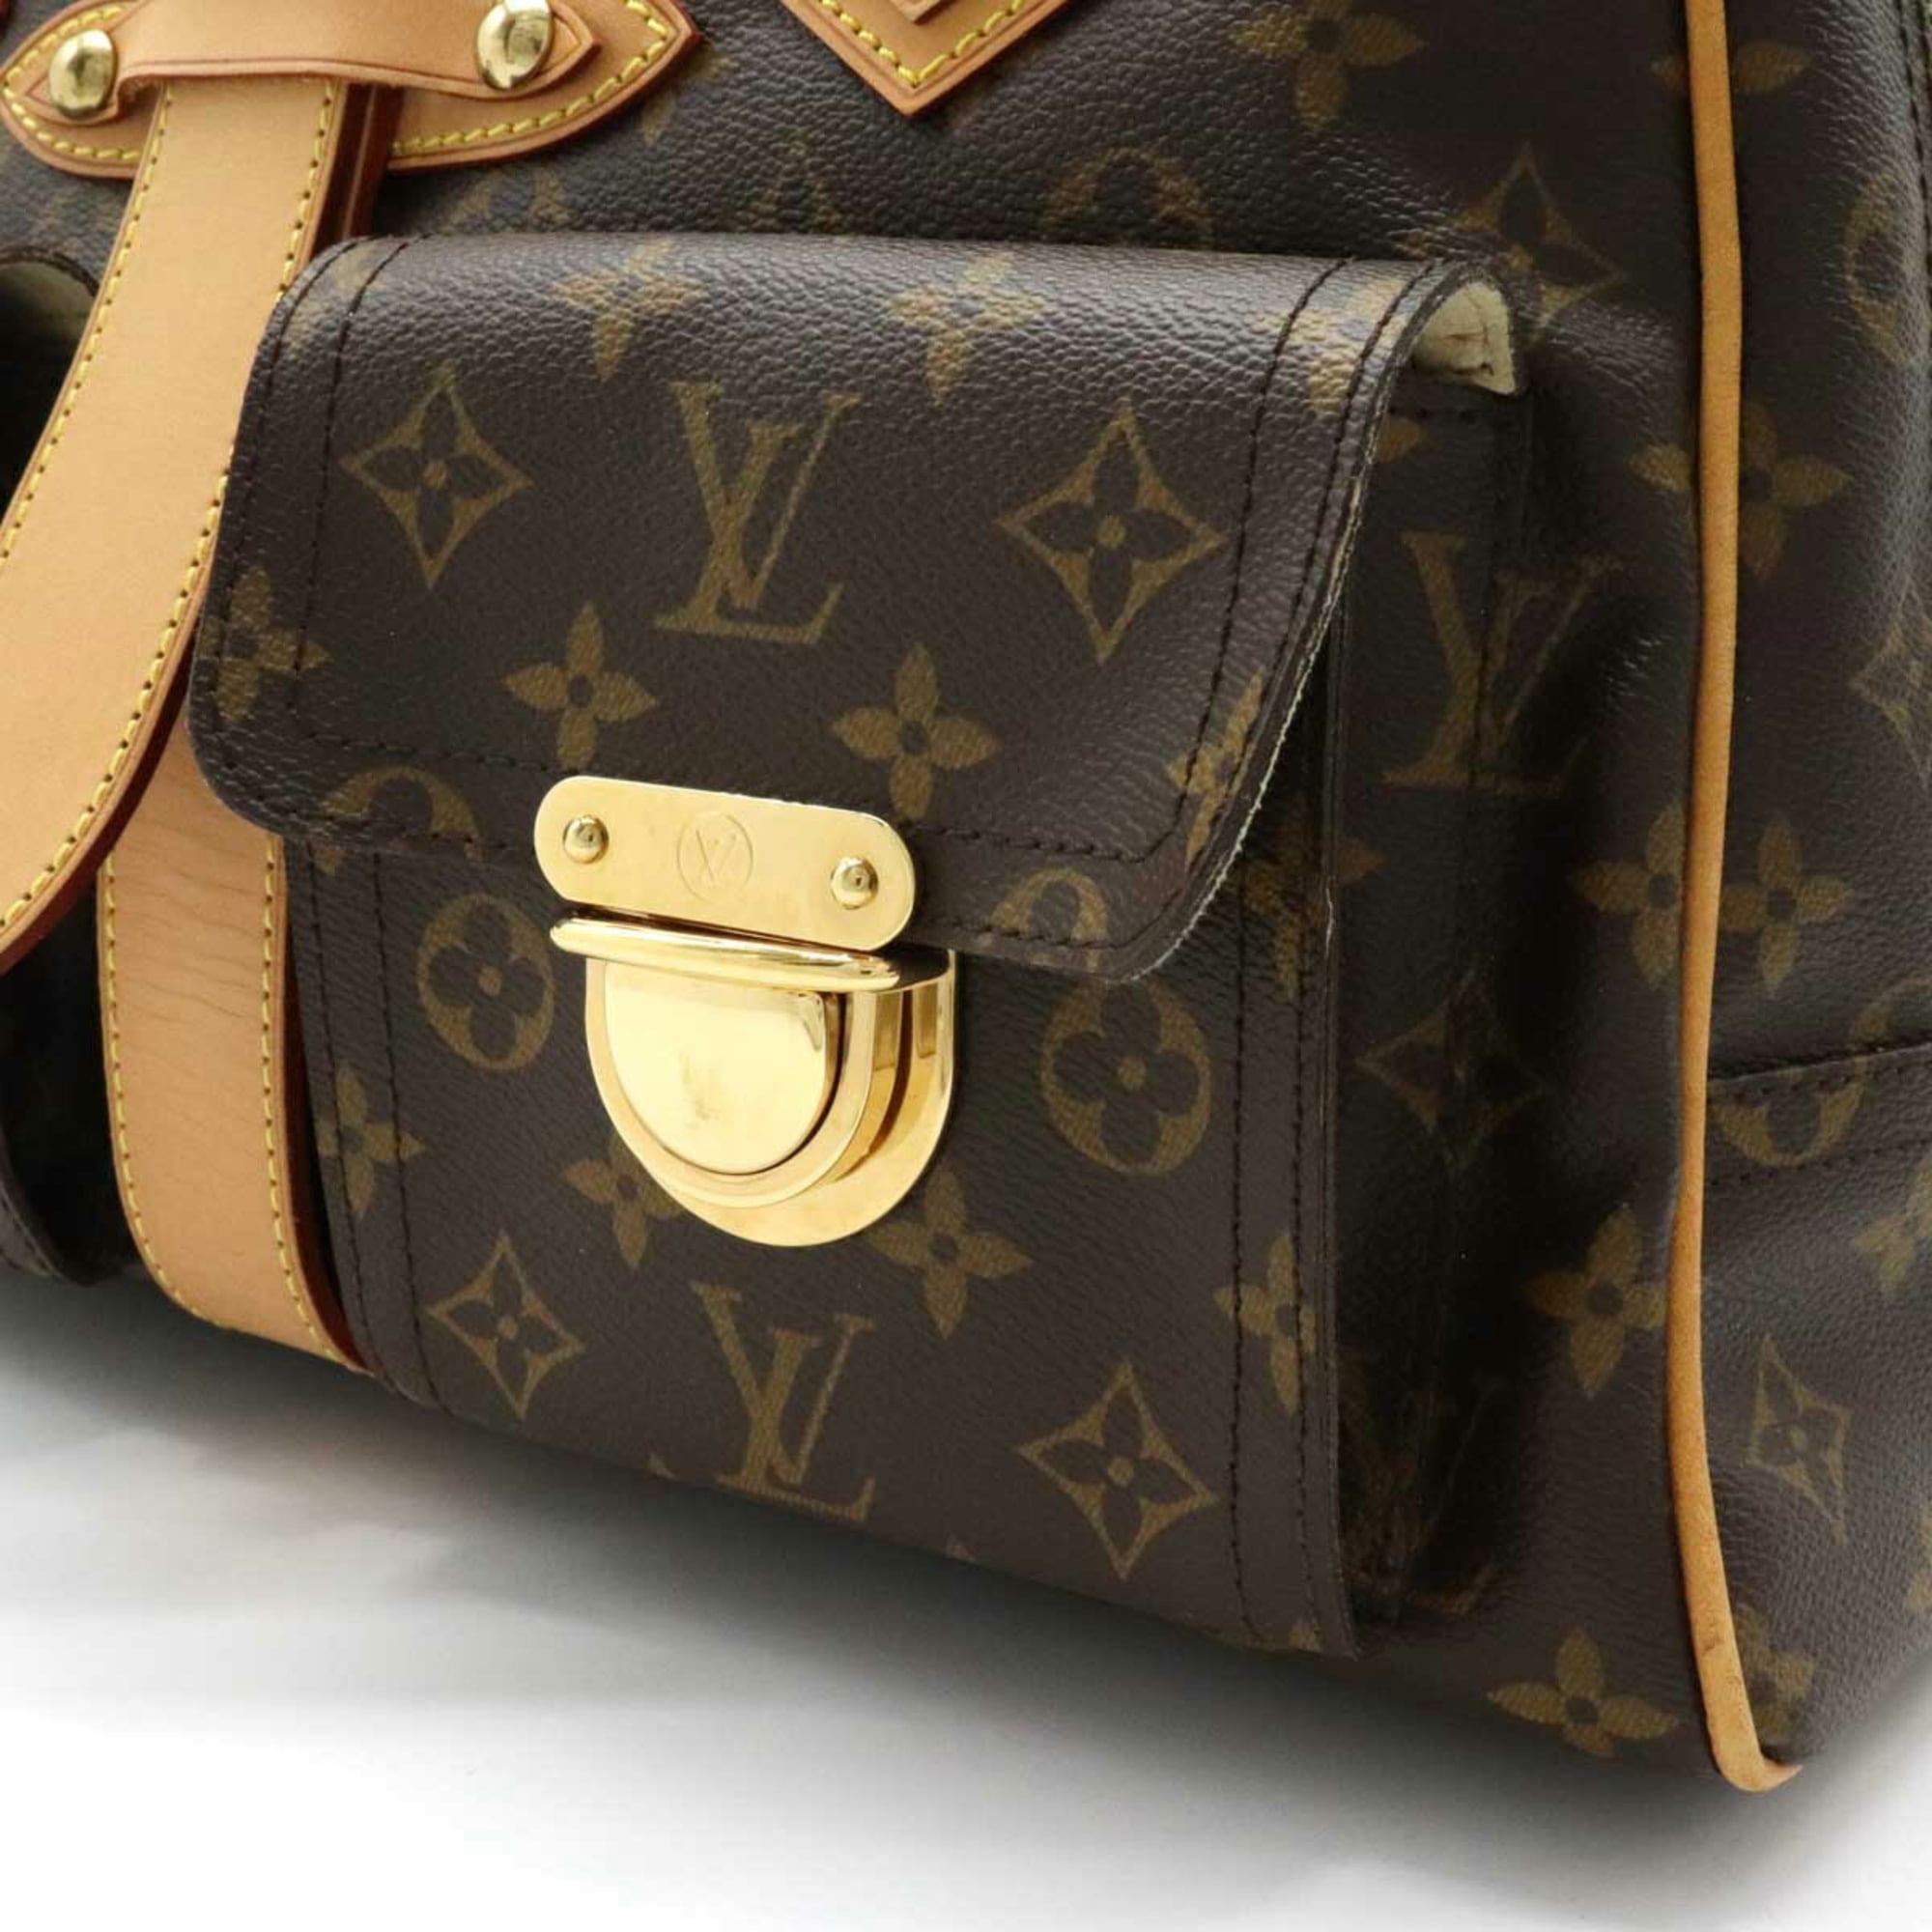 Louis Vuitton Manhattan shoulder bag in brown monogram canvas and